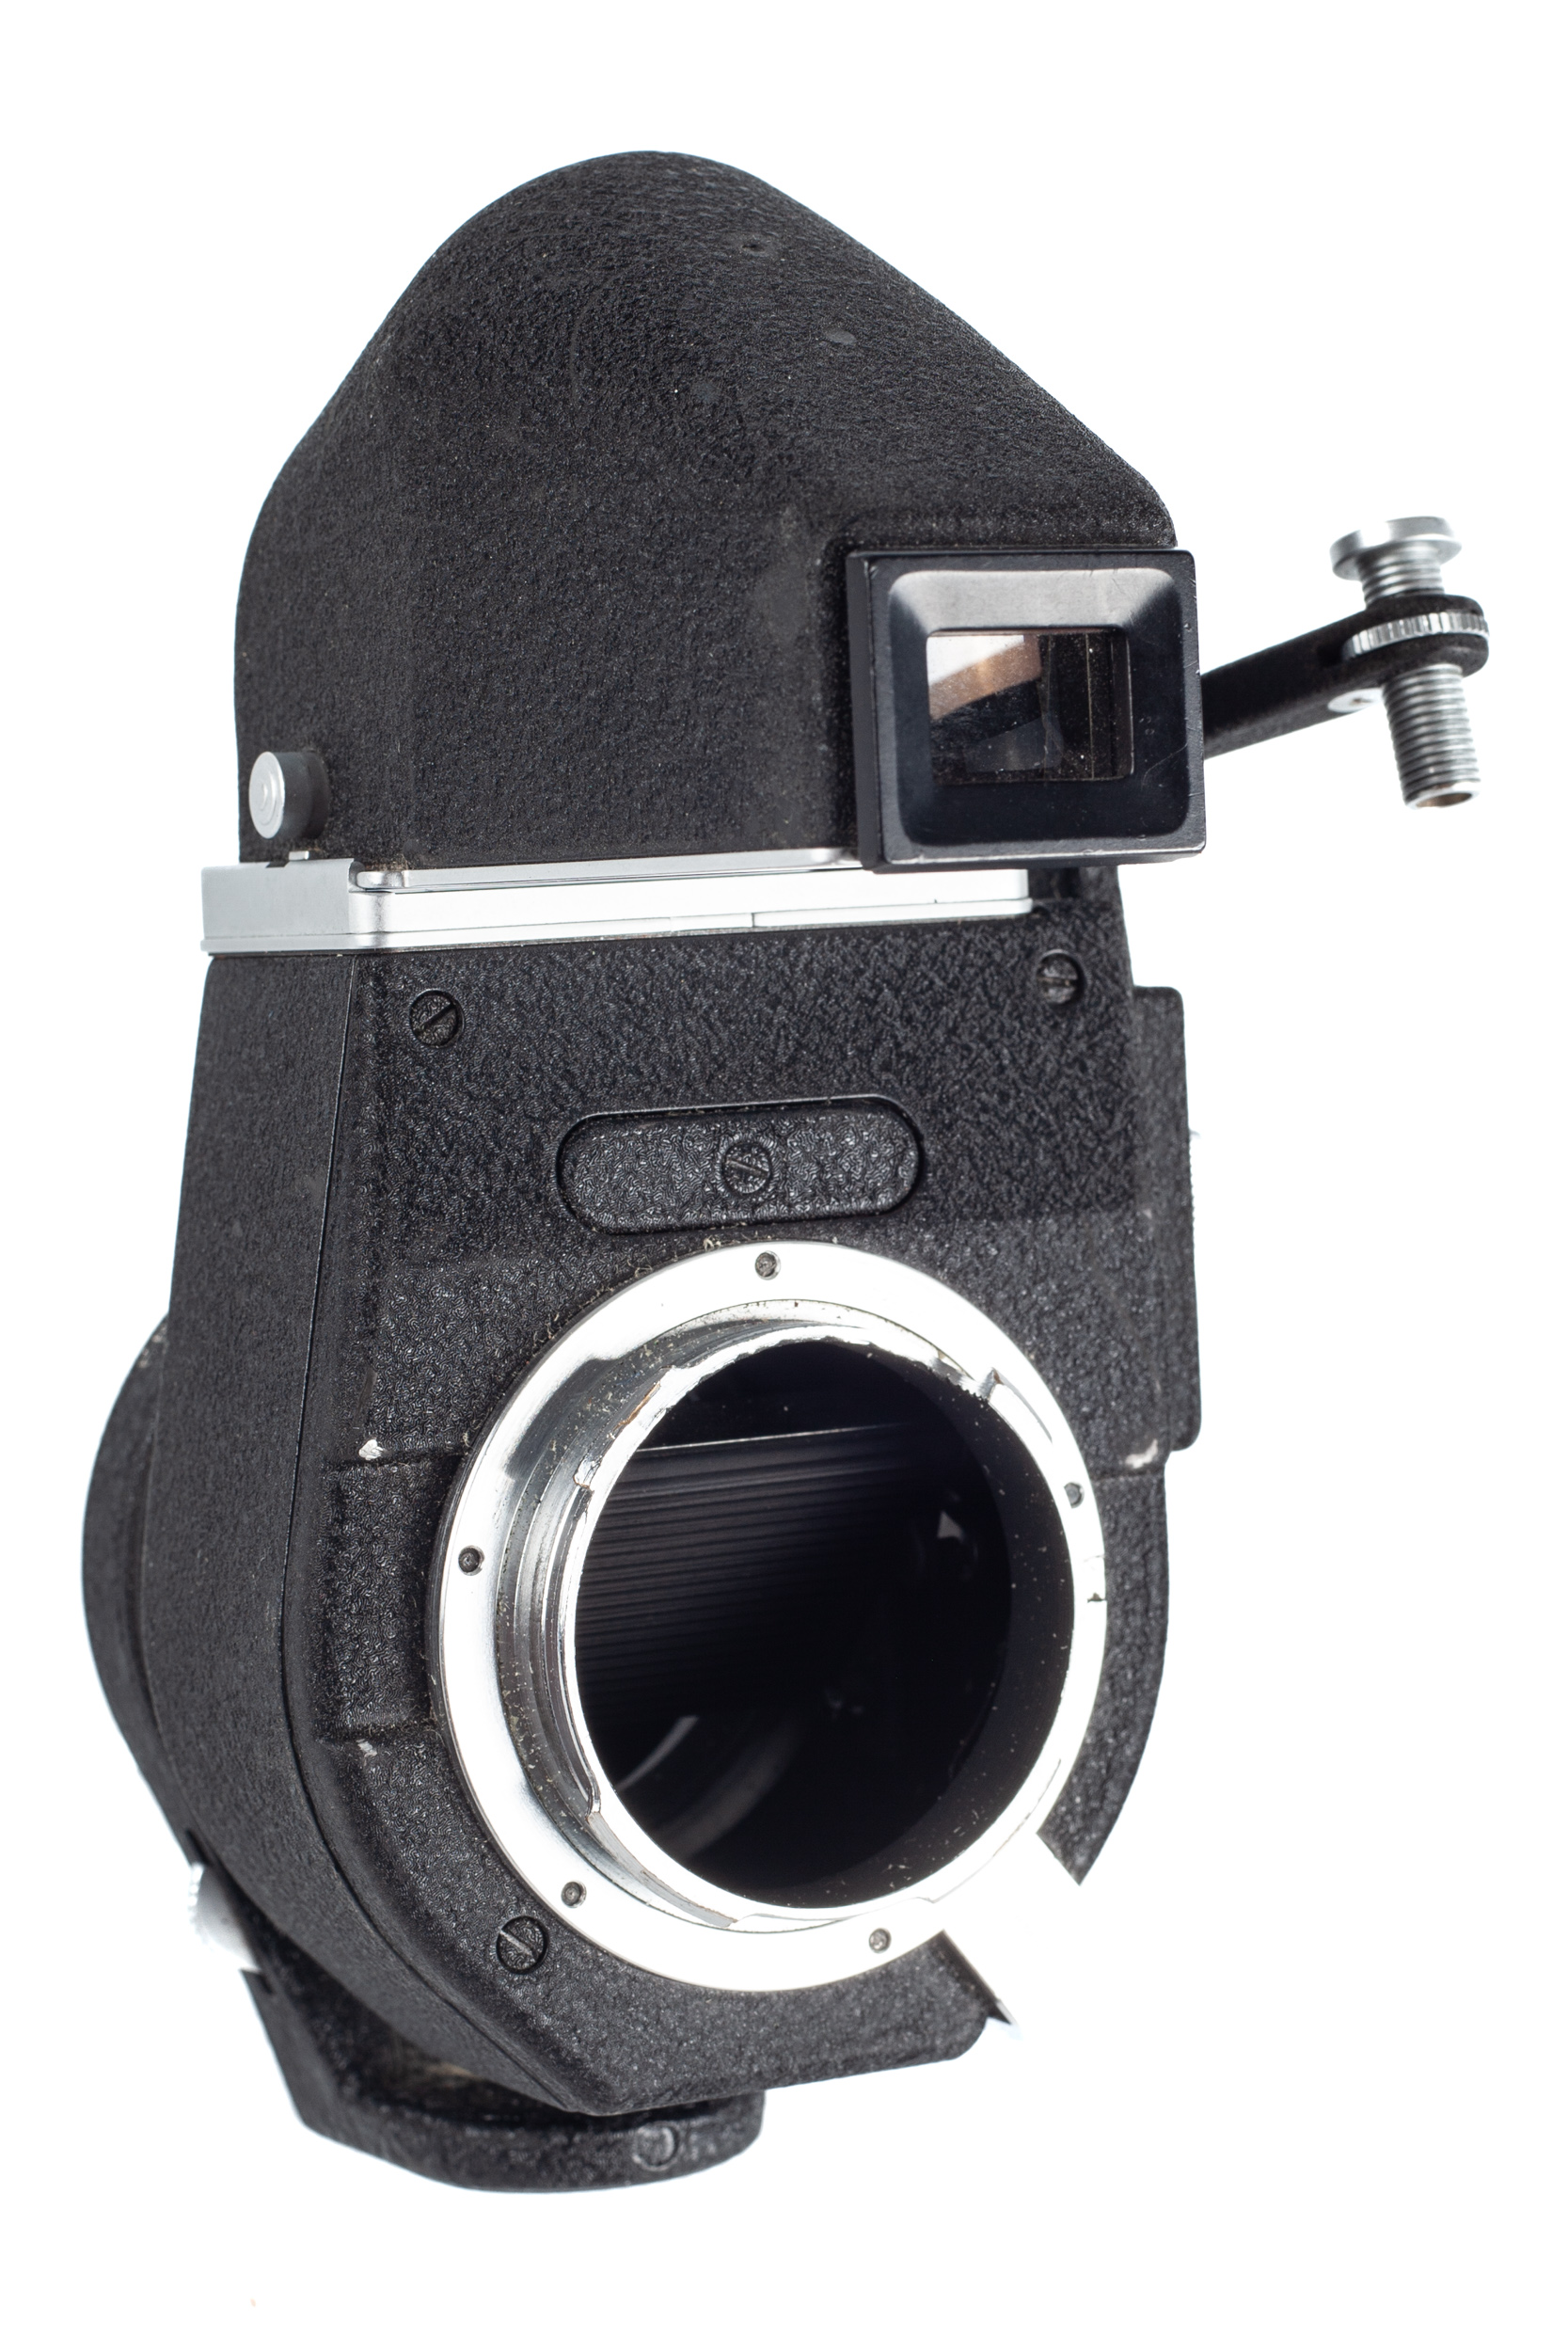 A Leica Leitz Visoflex, lens adaptor, and TTL viewfinder. - Image 3 of 4